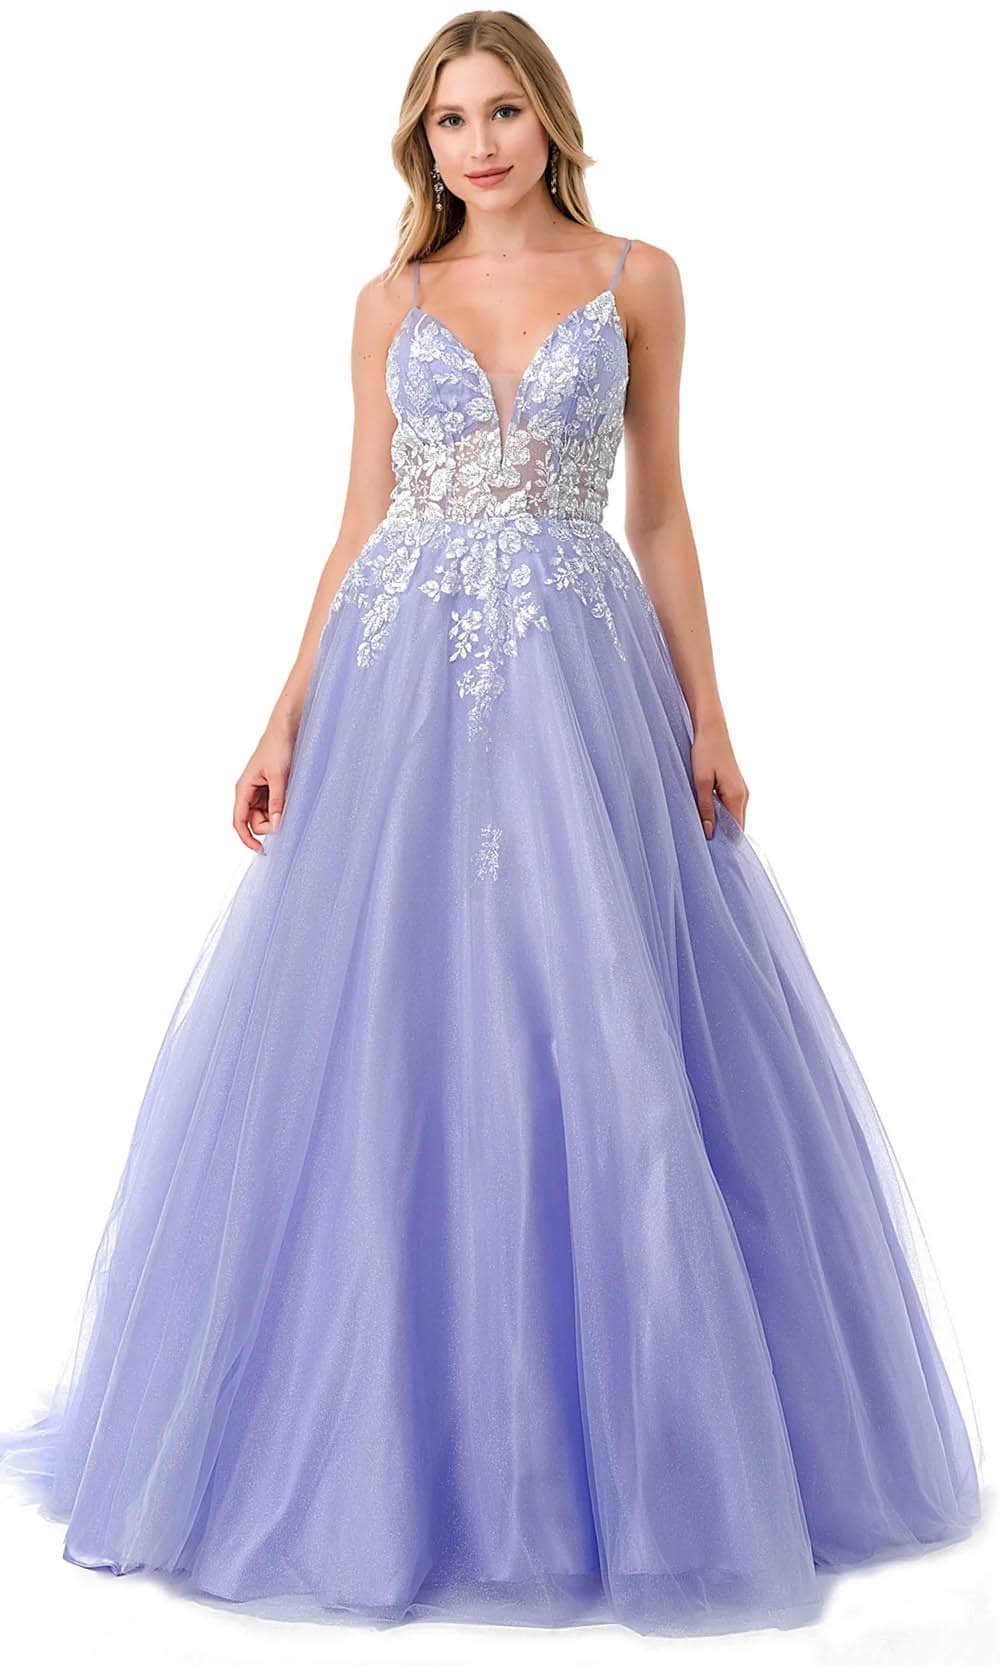 Image of Aspeed Design L2791B - Applique Sweetheart Prom Dress